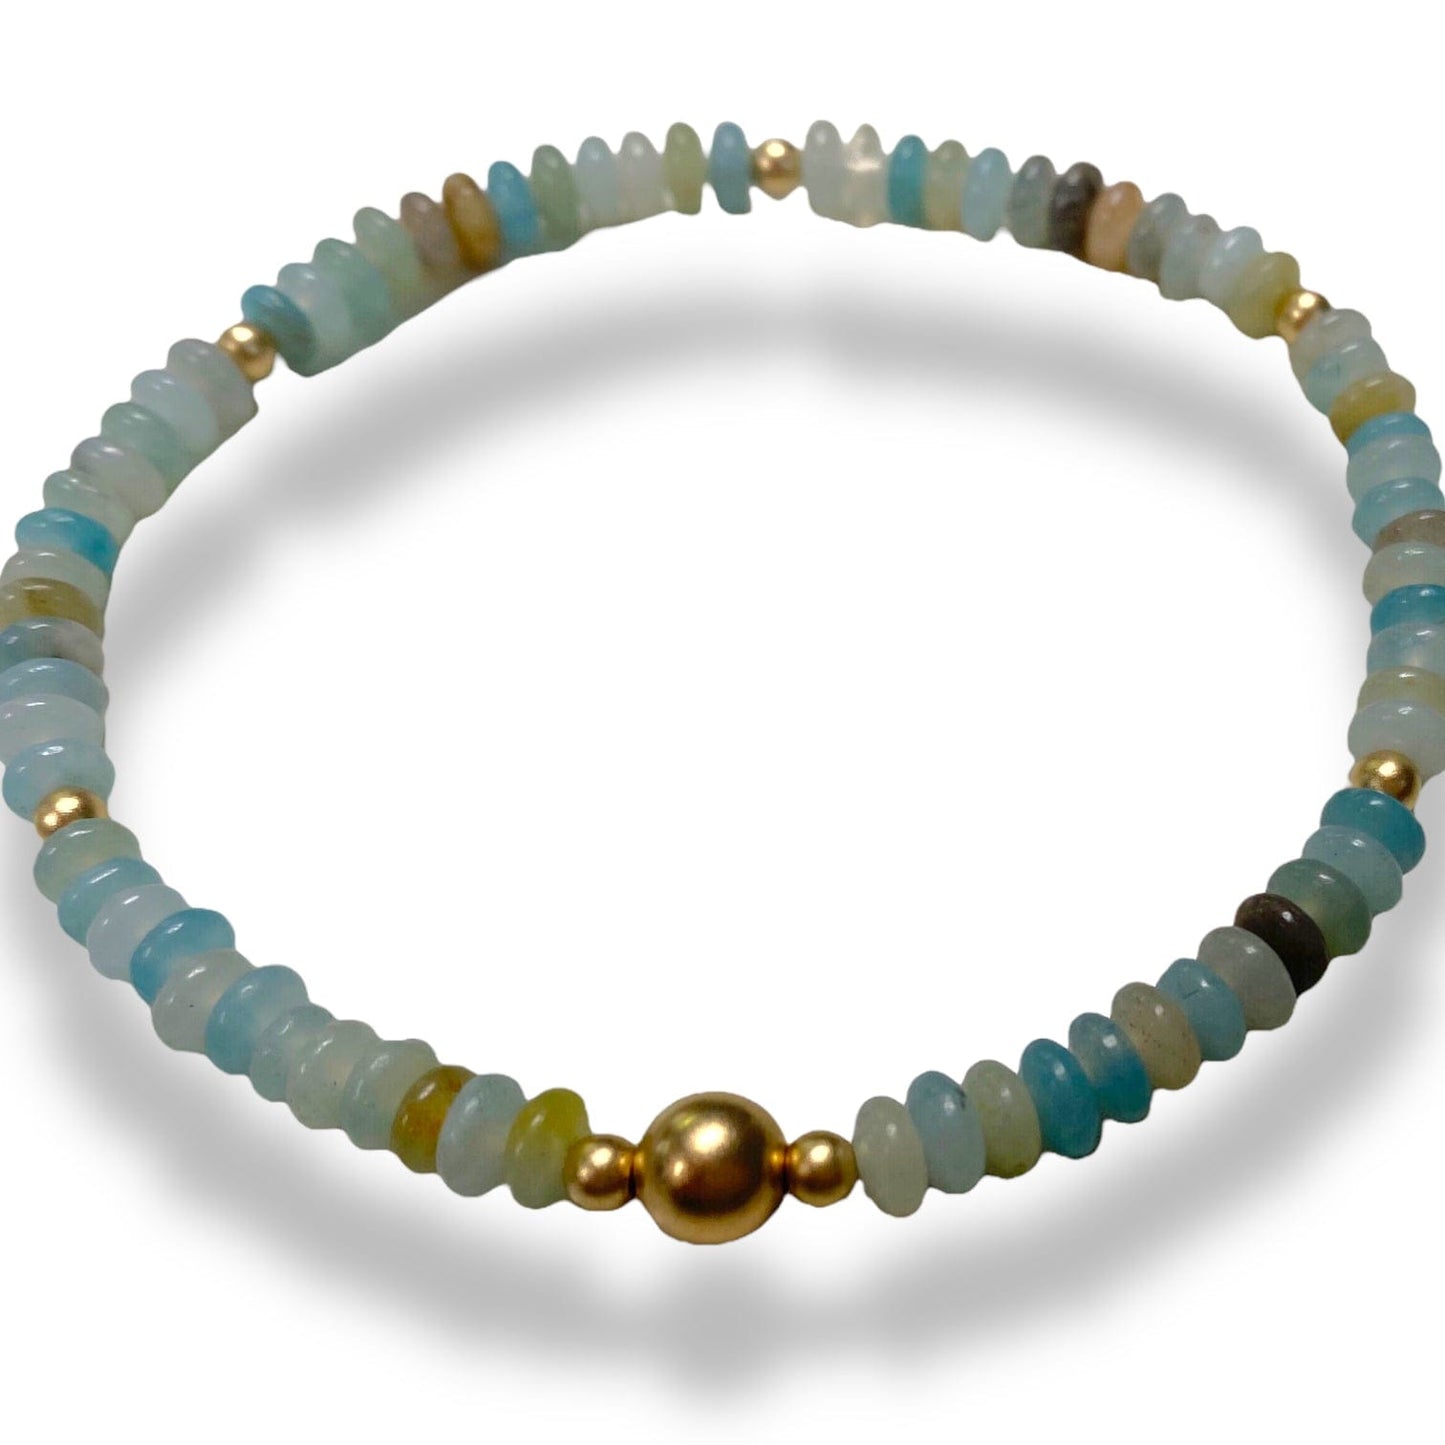 Gemstone Mini Stack Bracelet - Jewelry Making Kit - Too Cute Beads